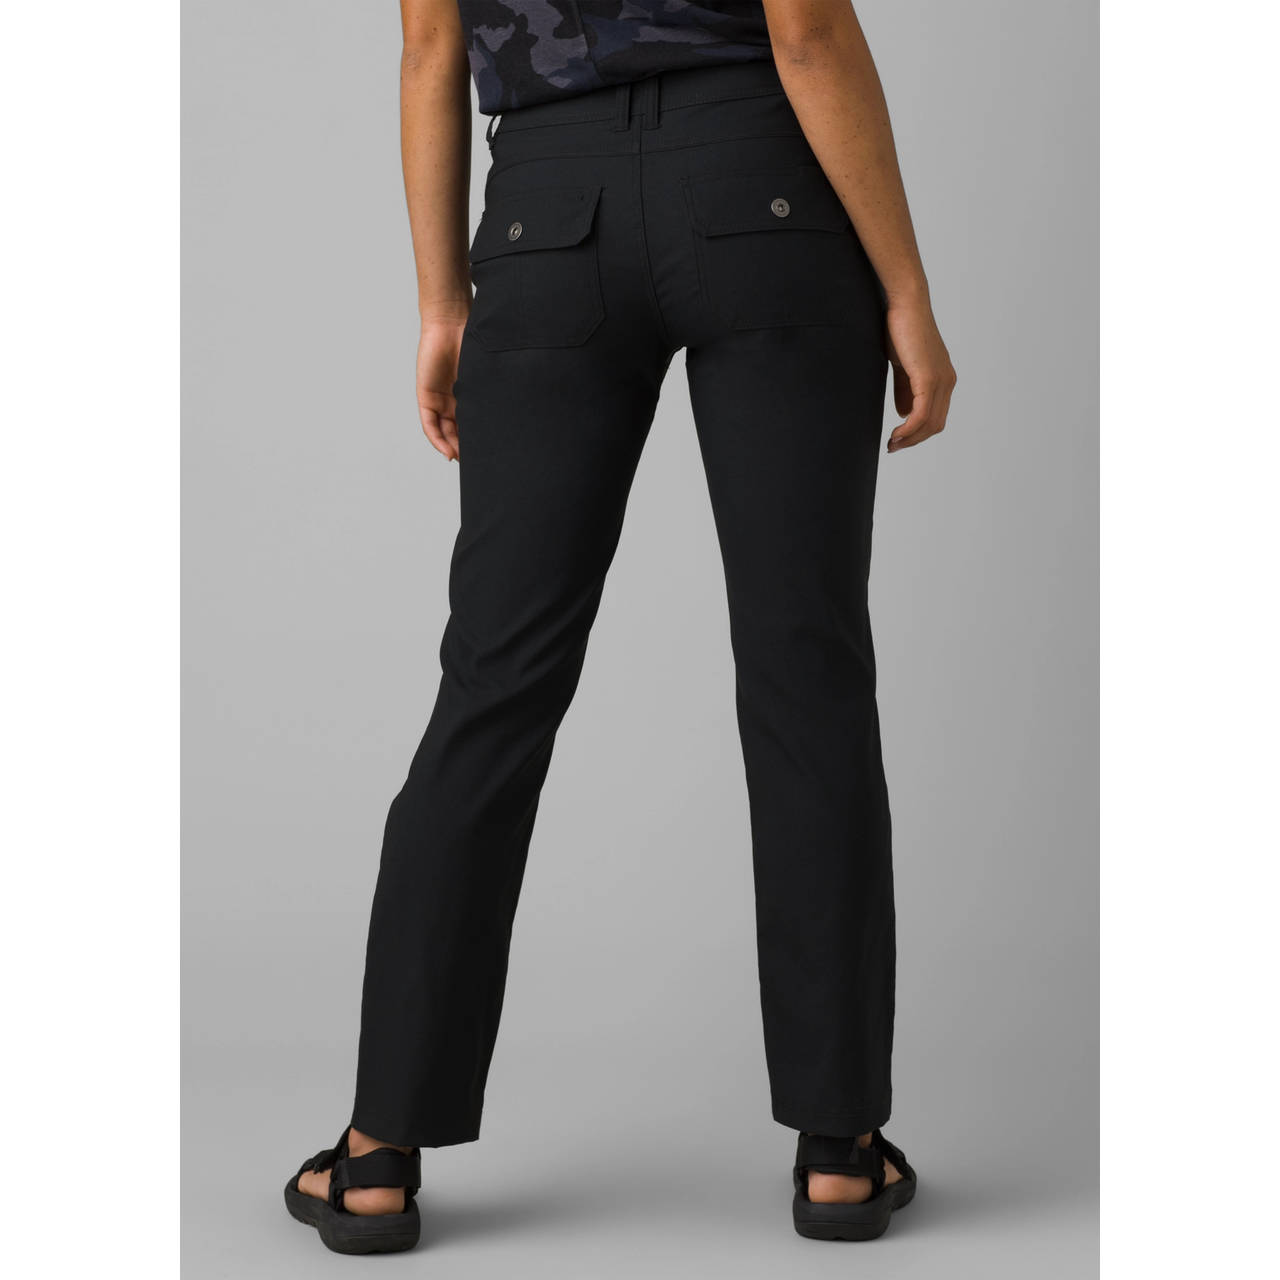 Floerns Women's Streetwear Asymmetrical Waist Flap Pocket Cargo Pants Grey  XS at Amazon Women's Clothing store